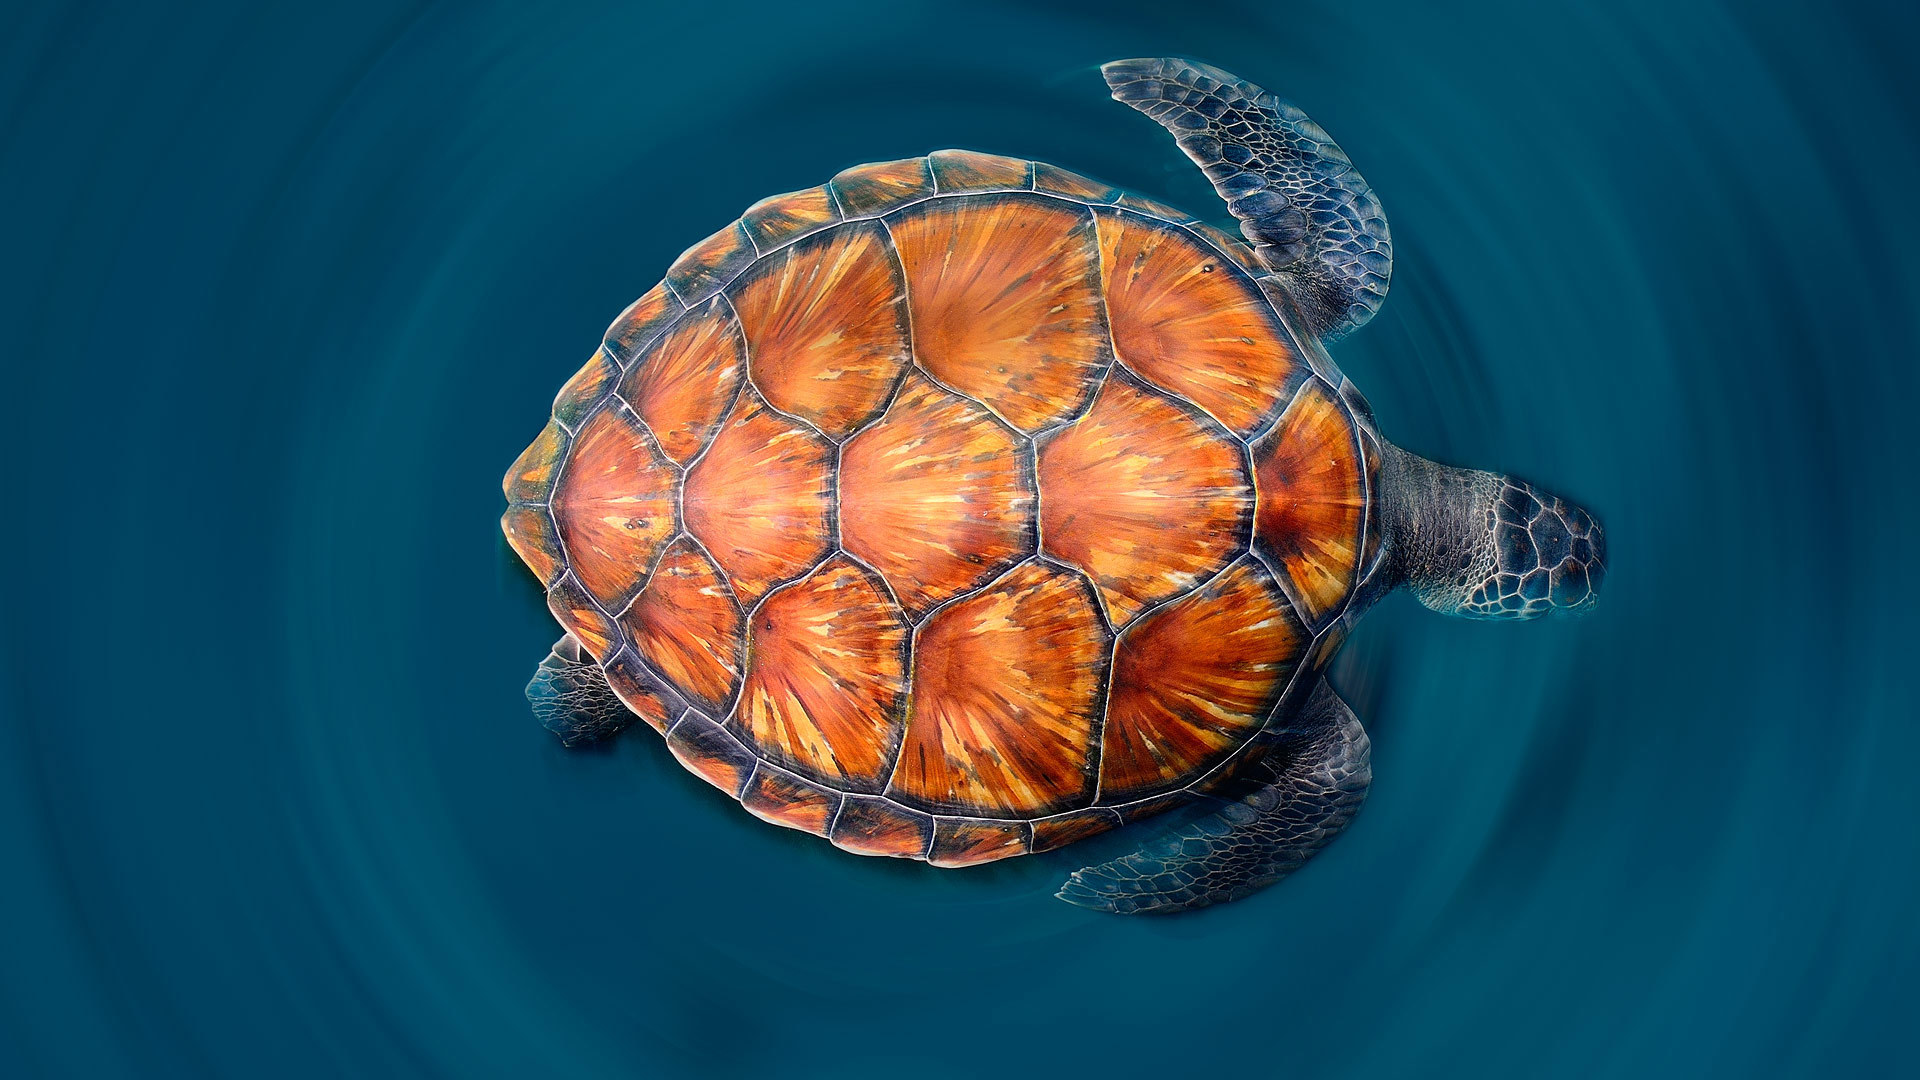 Turtle shell. Панцирь морской черепахи. Карапакс у черепахи что это. Карапакса морской черепахи. Адокус черепаха.